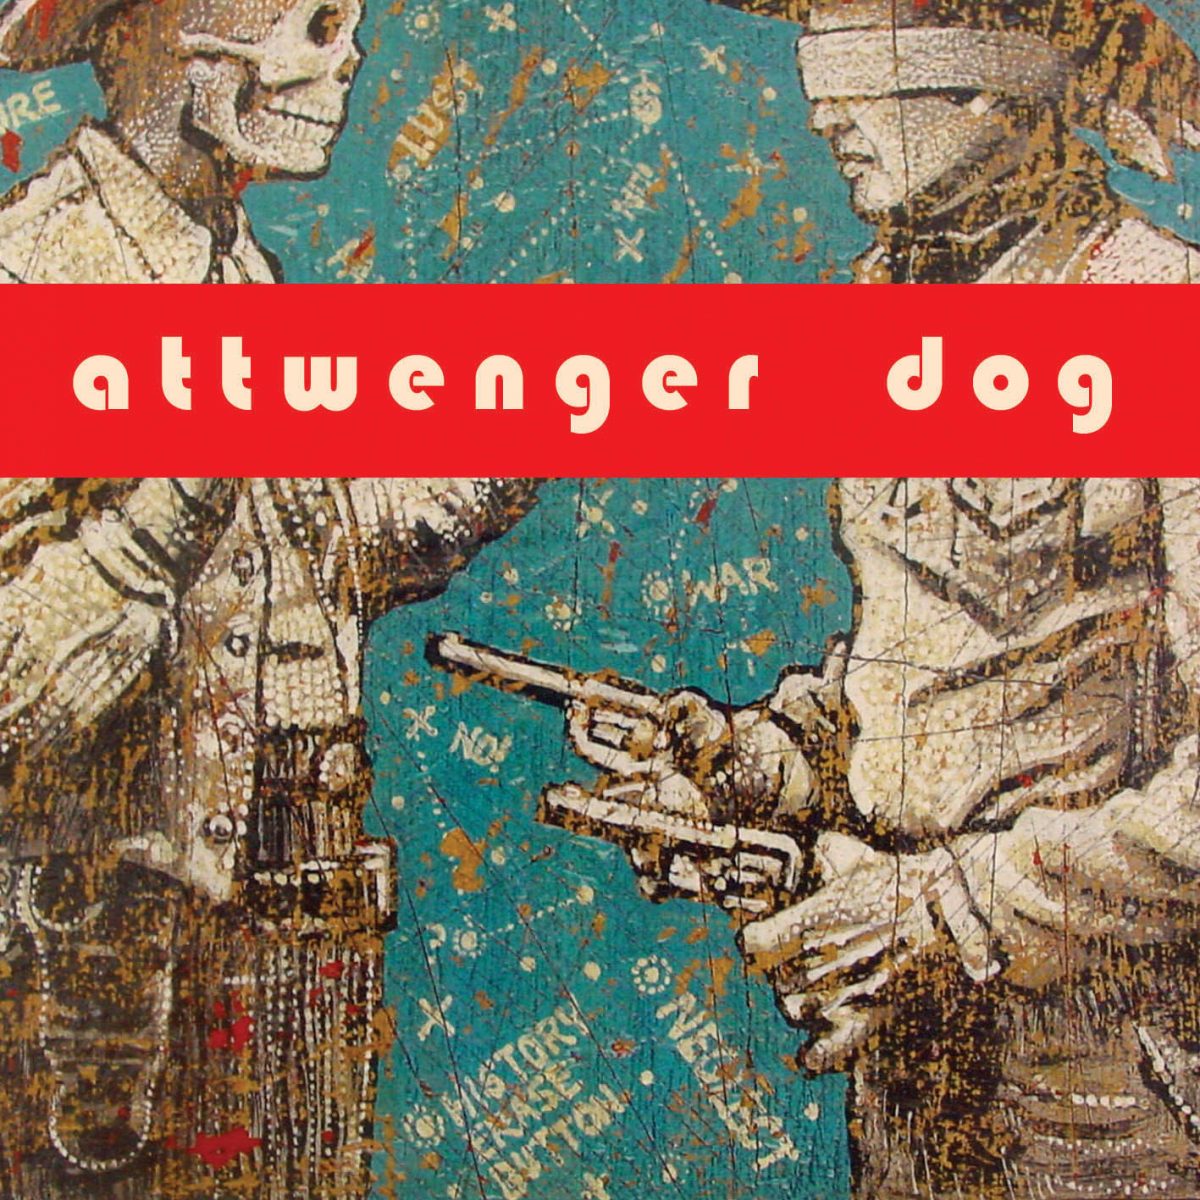 Attwenger - Dog